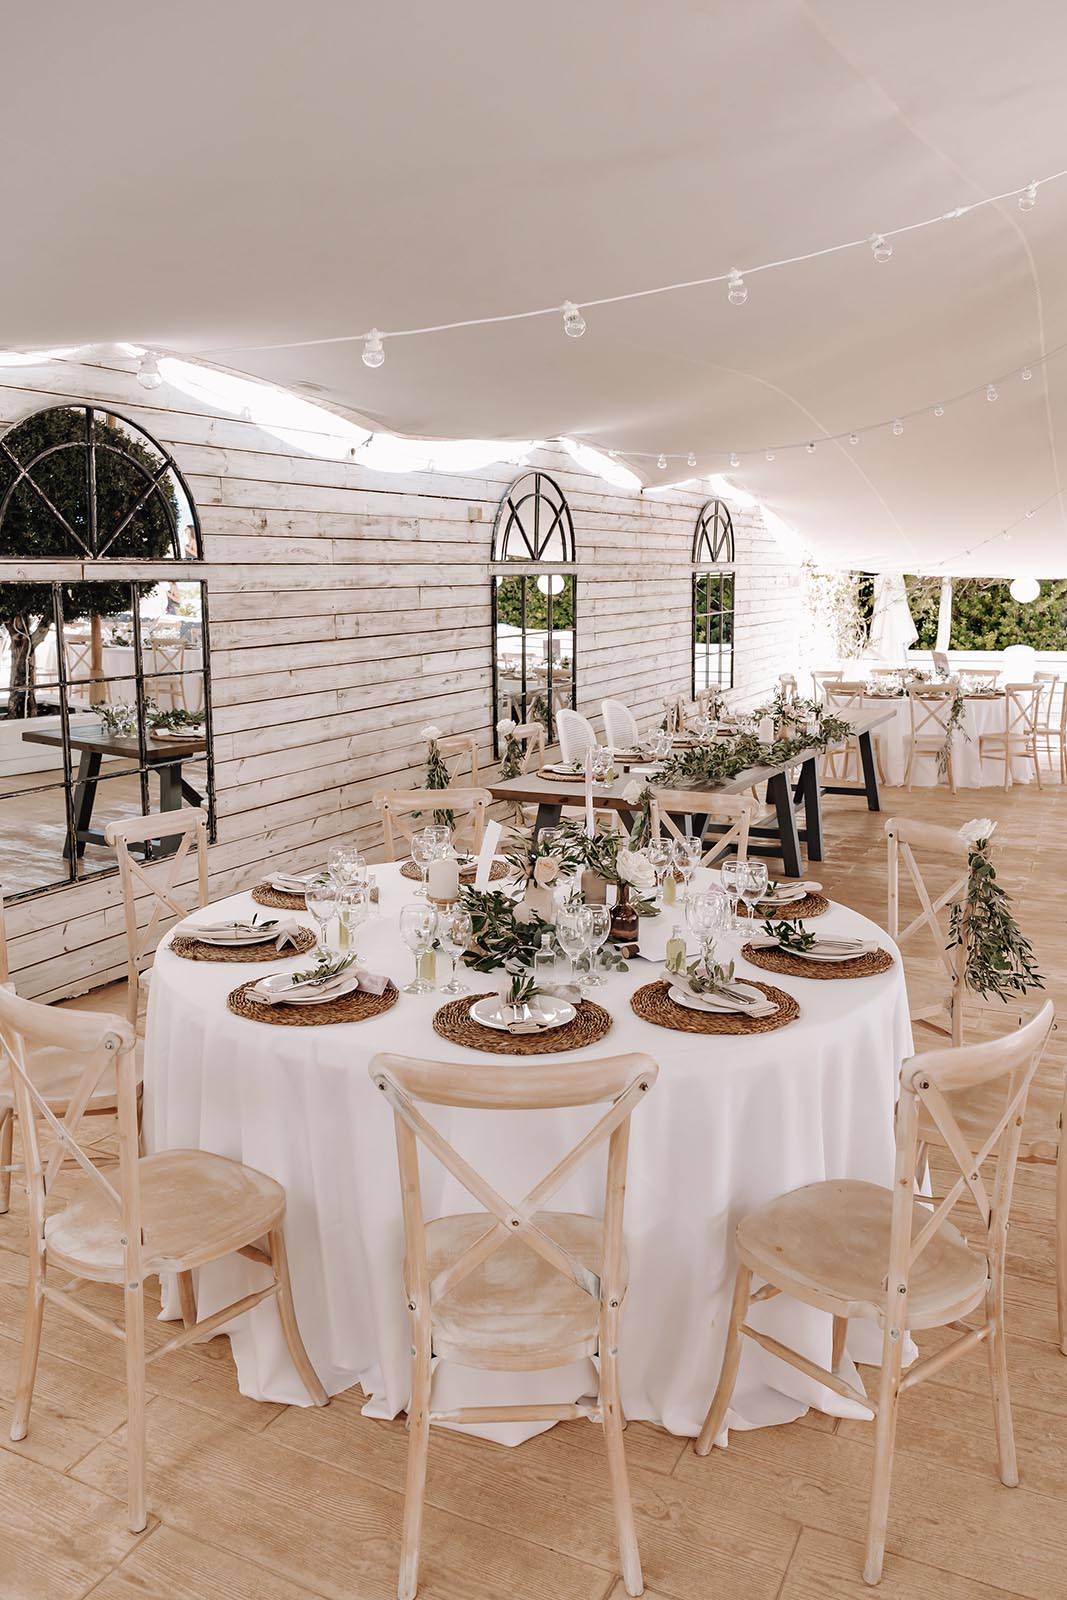 Wedding venue and tables